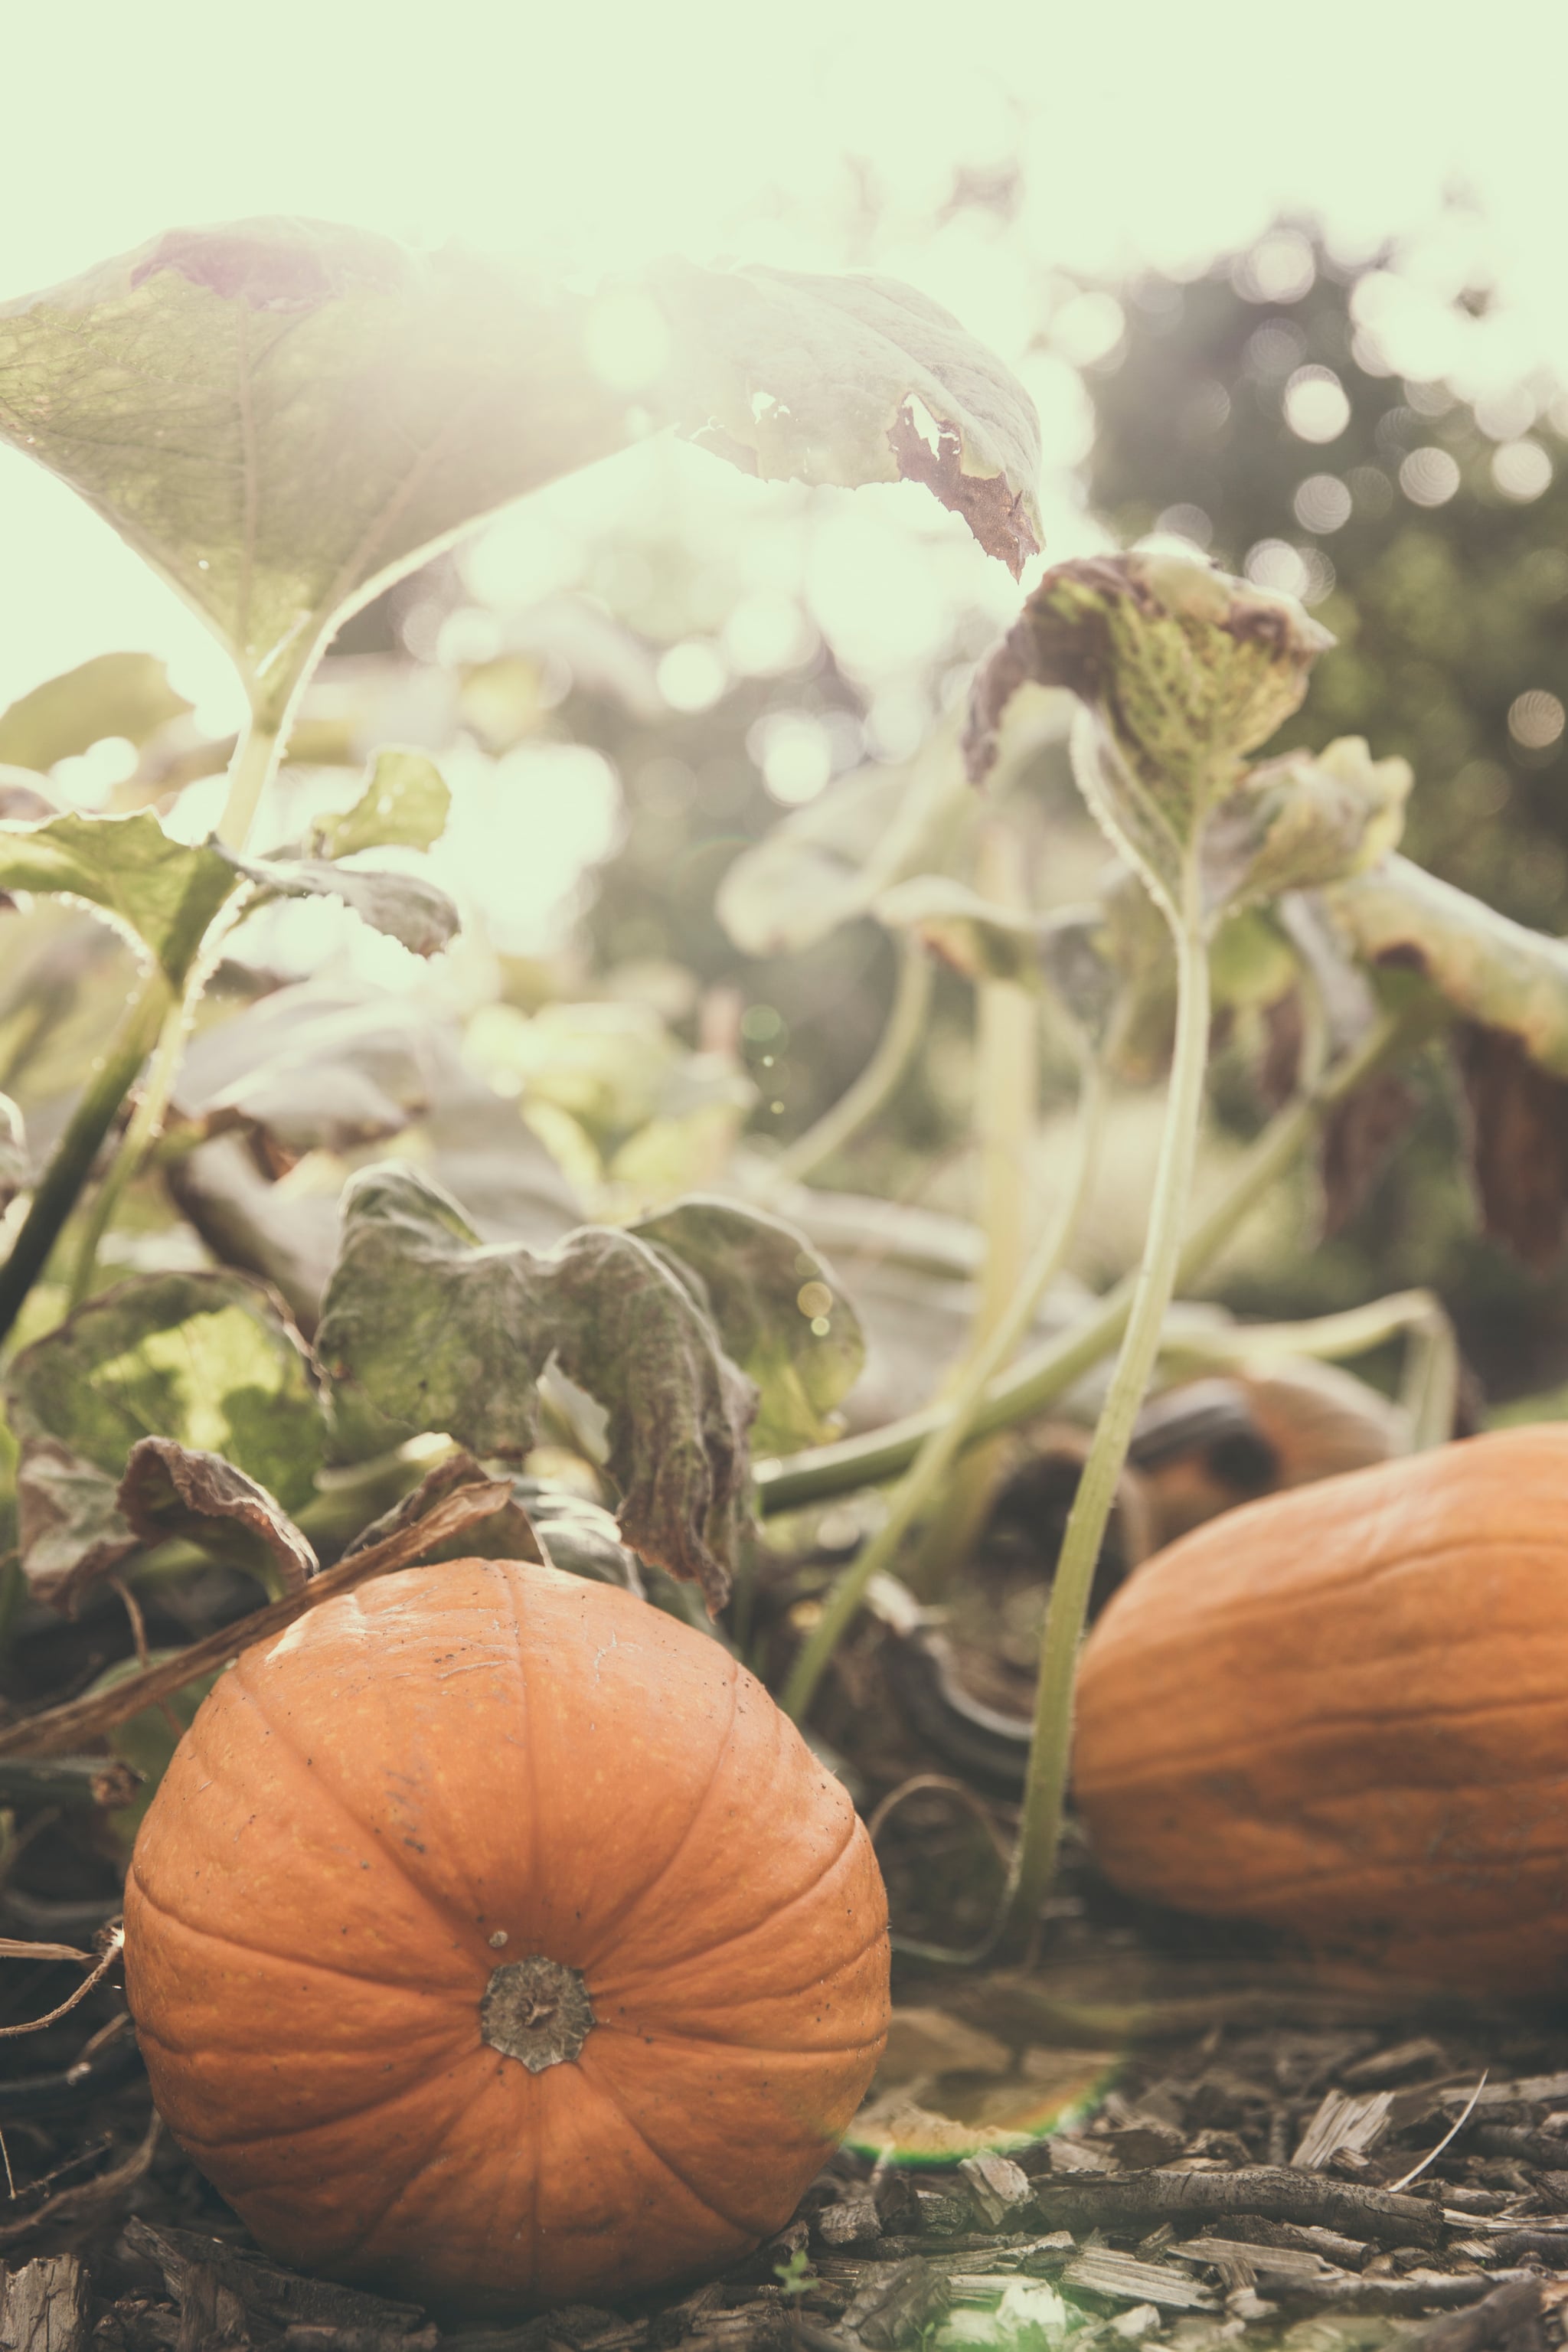 Download wallpaper 800x1200 pumpkin vegetable harvest autumn iphone 4s4  for parallax hd background